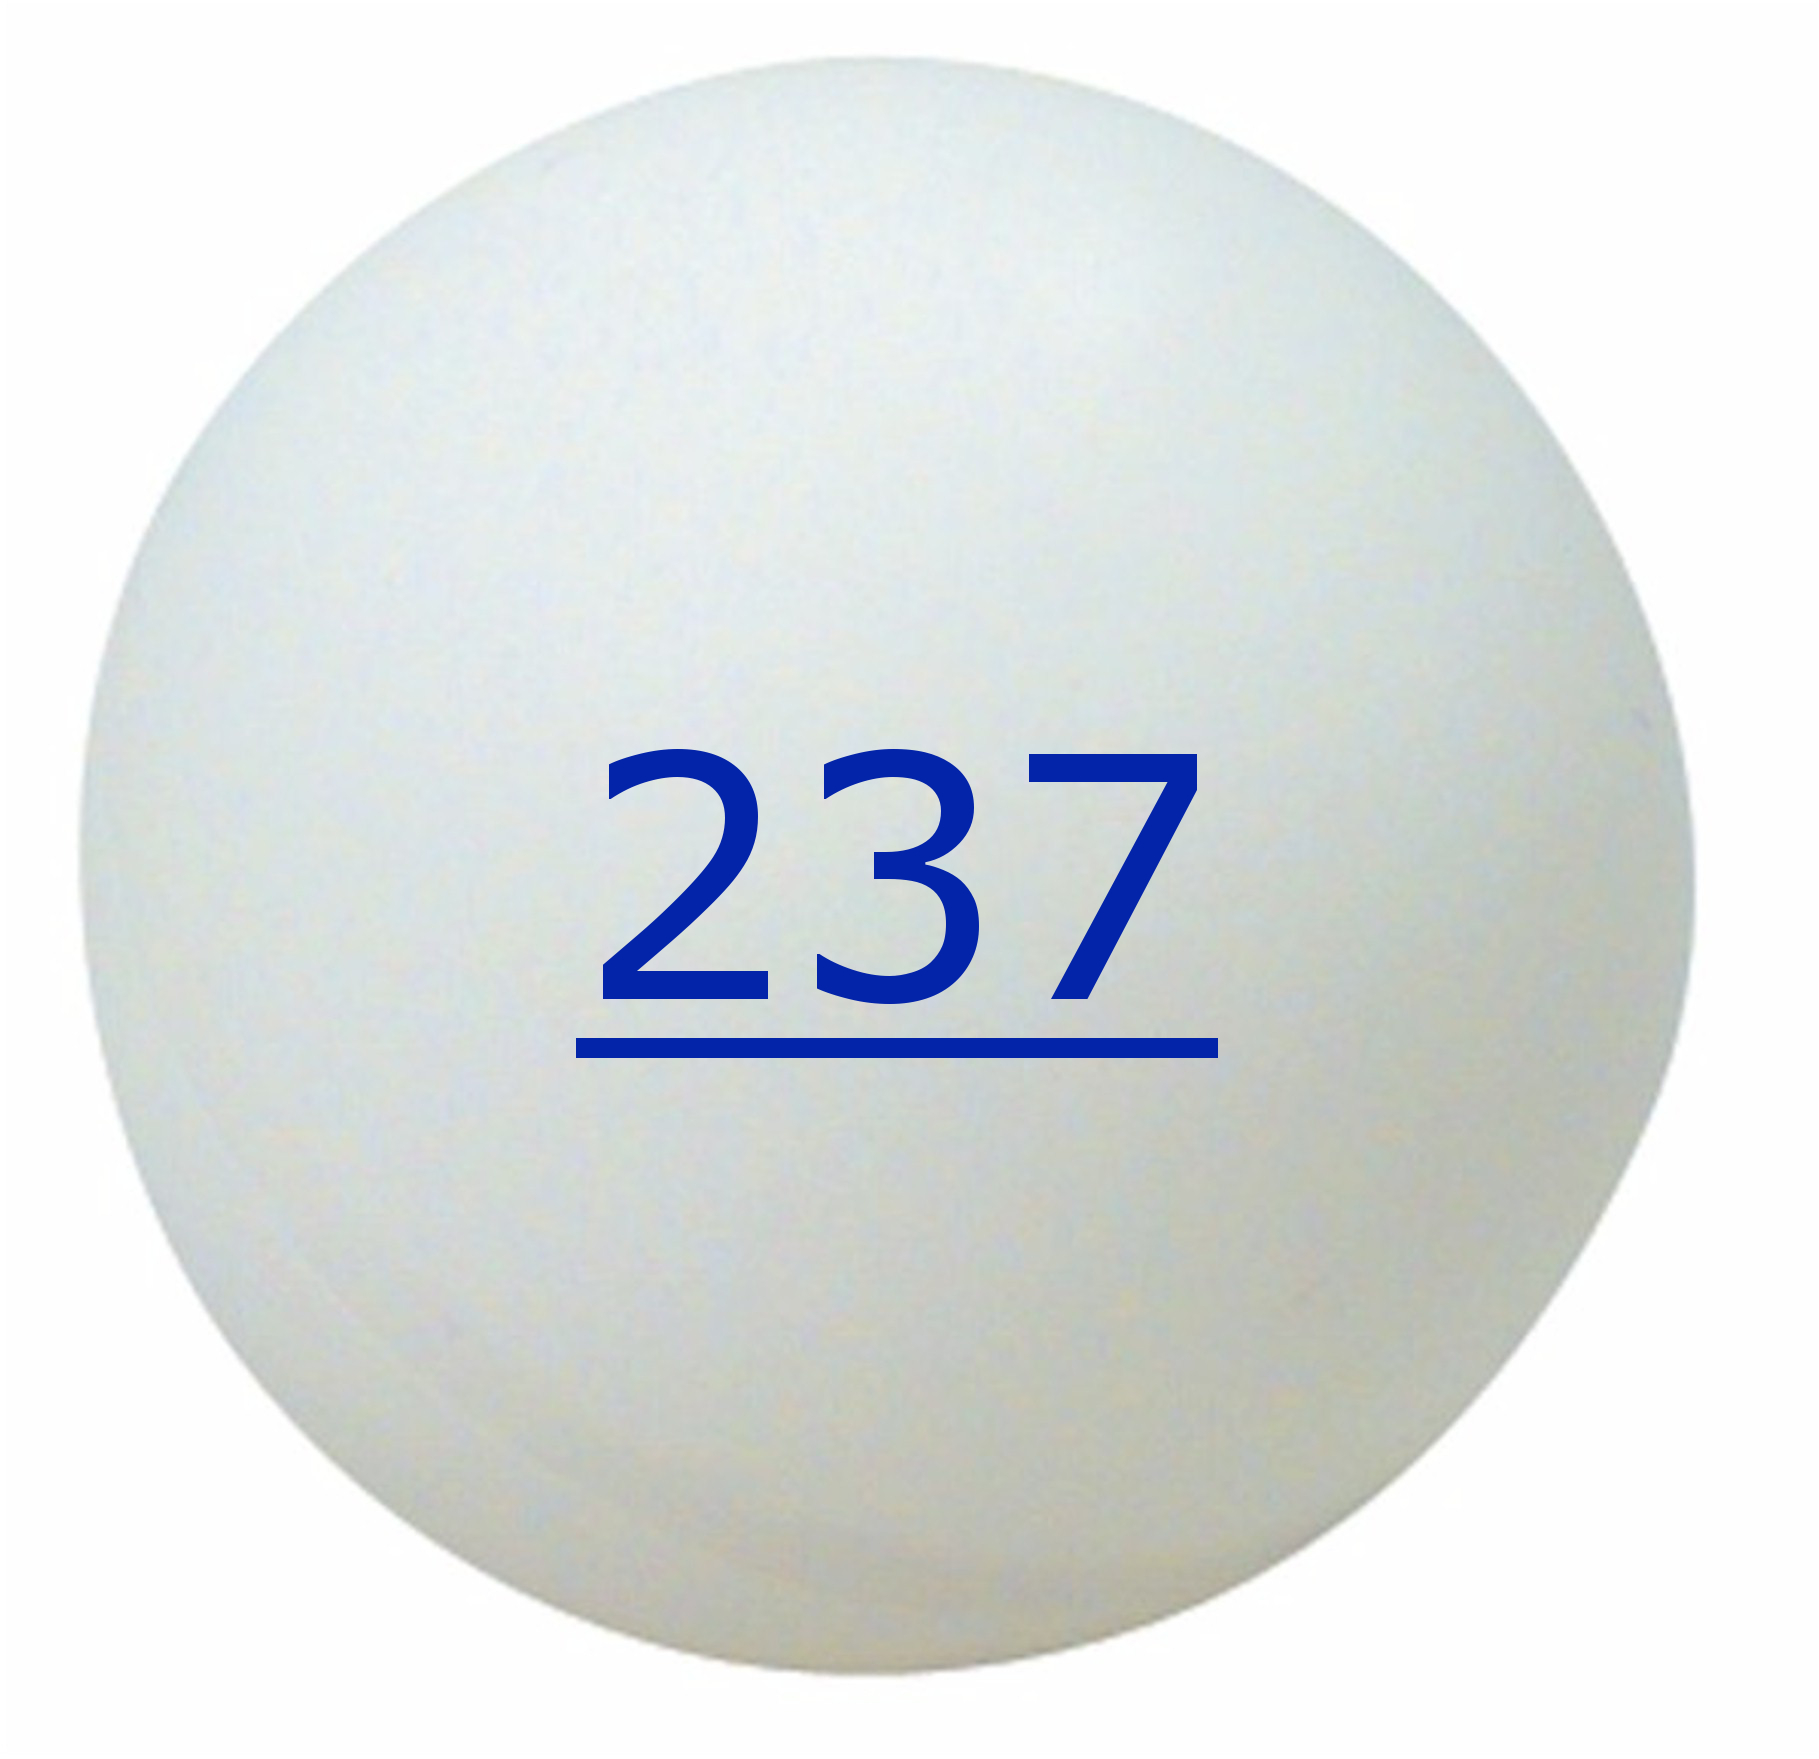 Personalizable Ping Pong Balls